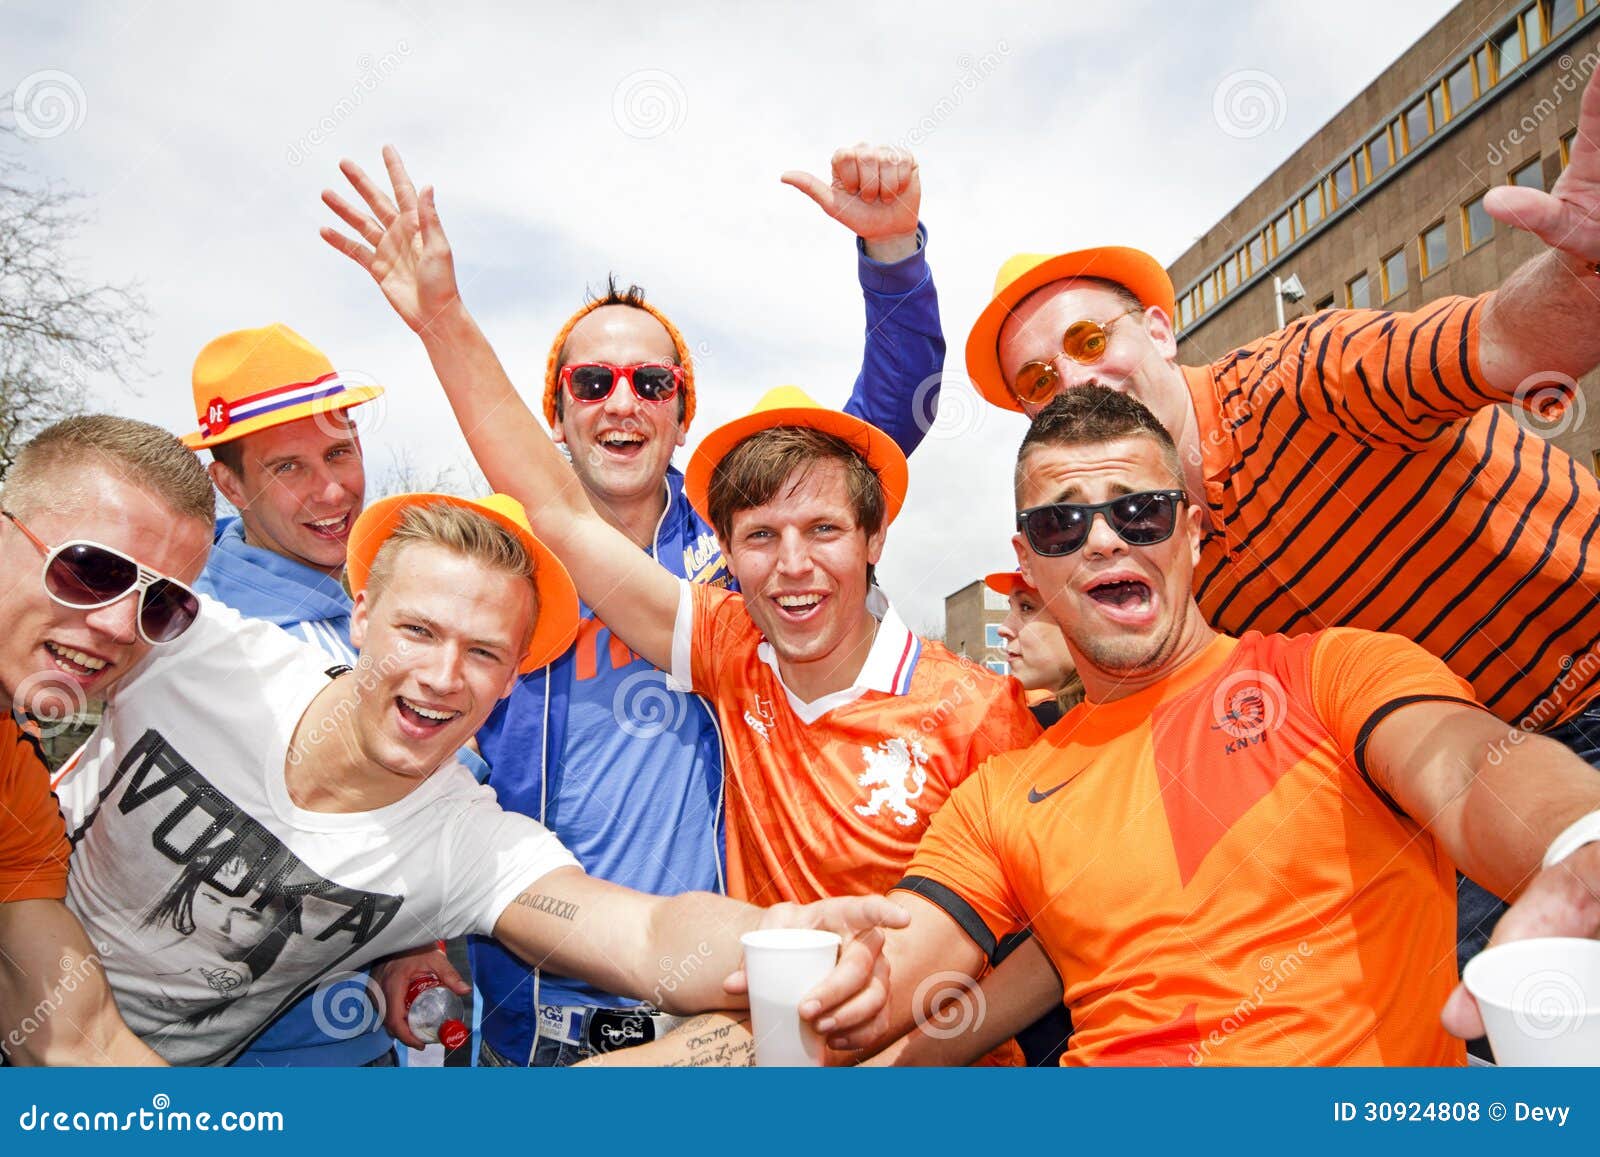 AMSTERDAM, NETHERLANDS - APRIL 30: People in Orange Celebrating